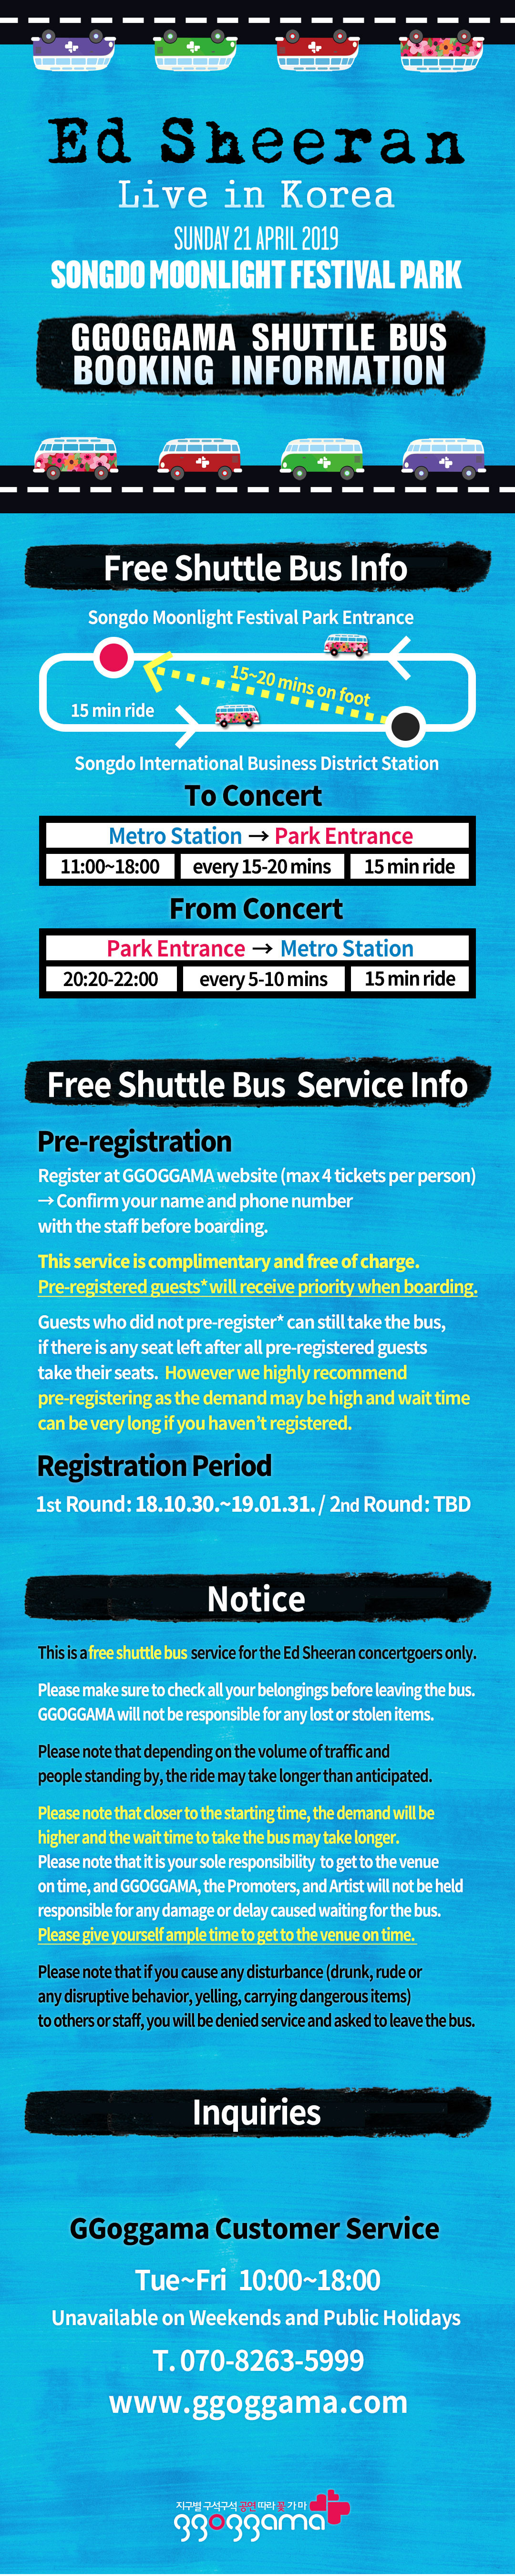 [Ed Sheeran] Free Shuttle Bus Booking Information